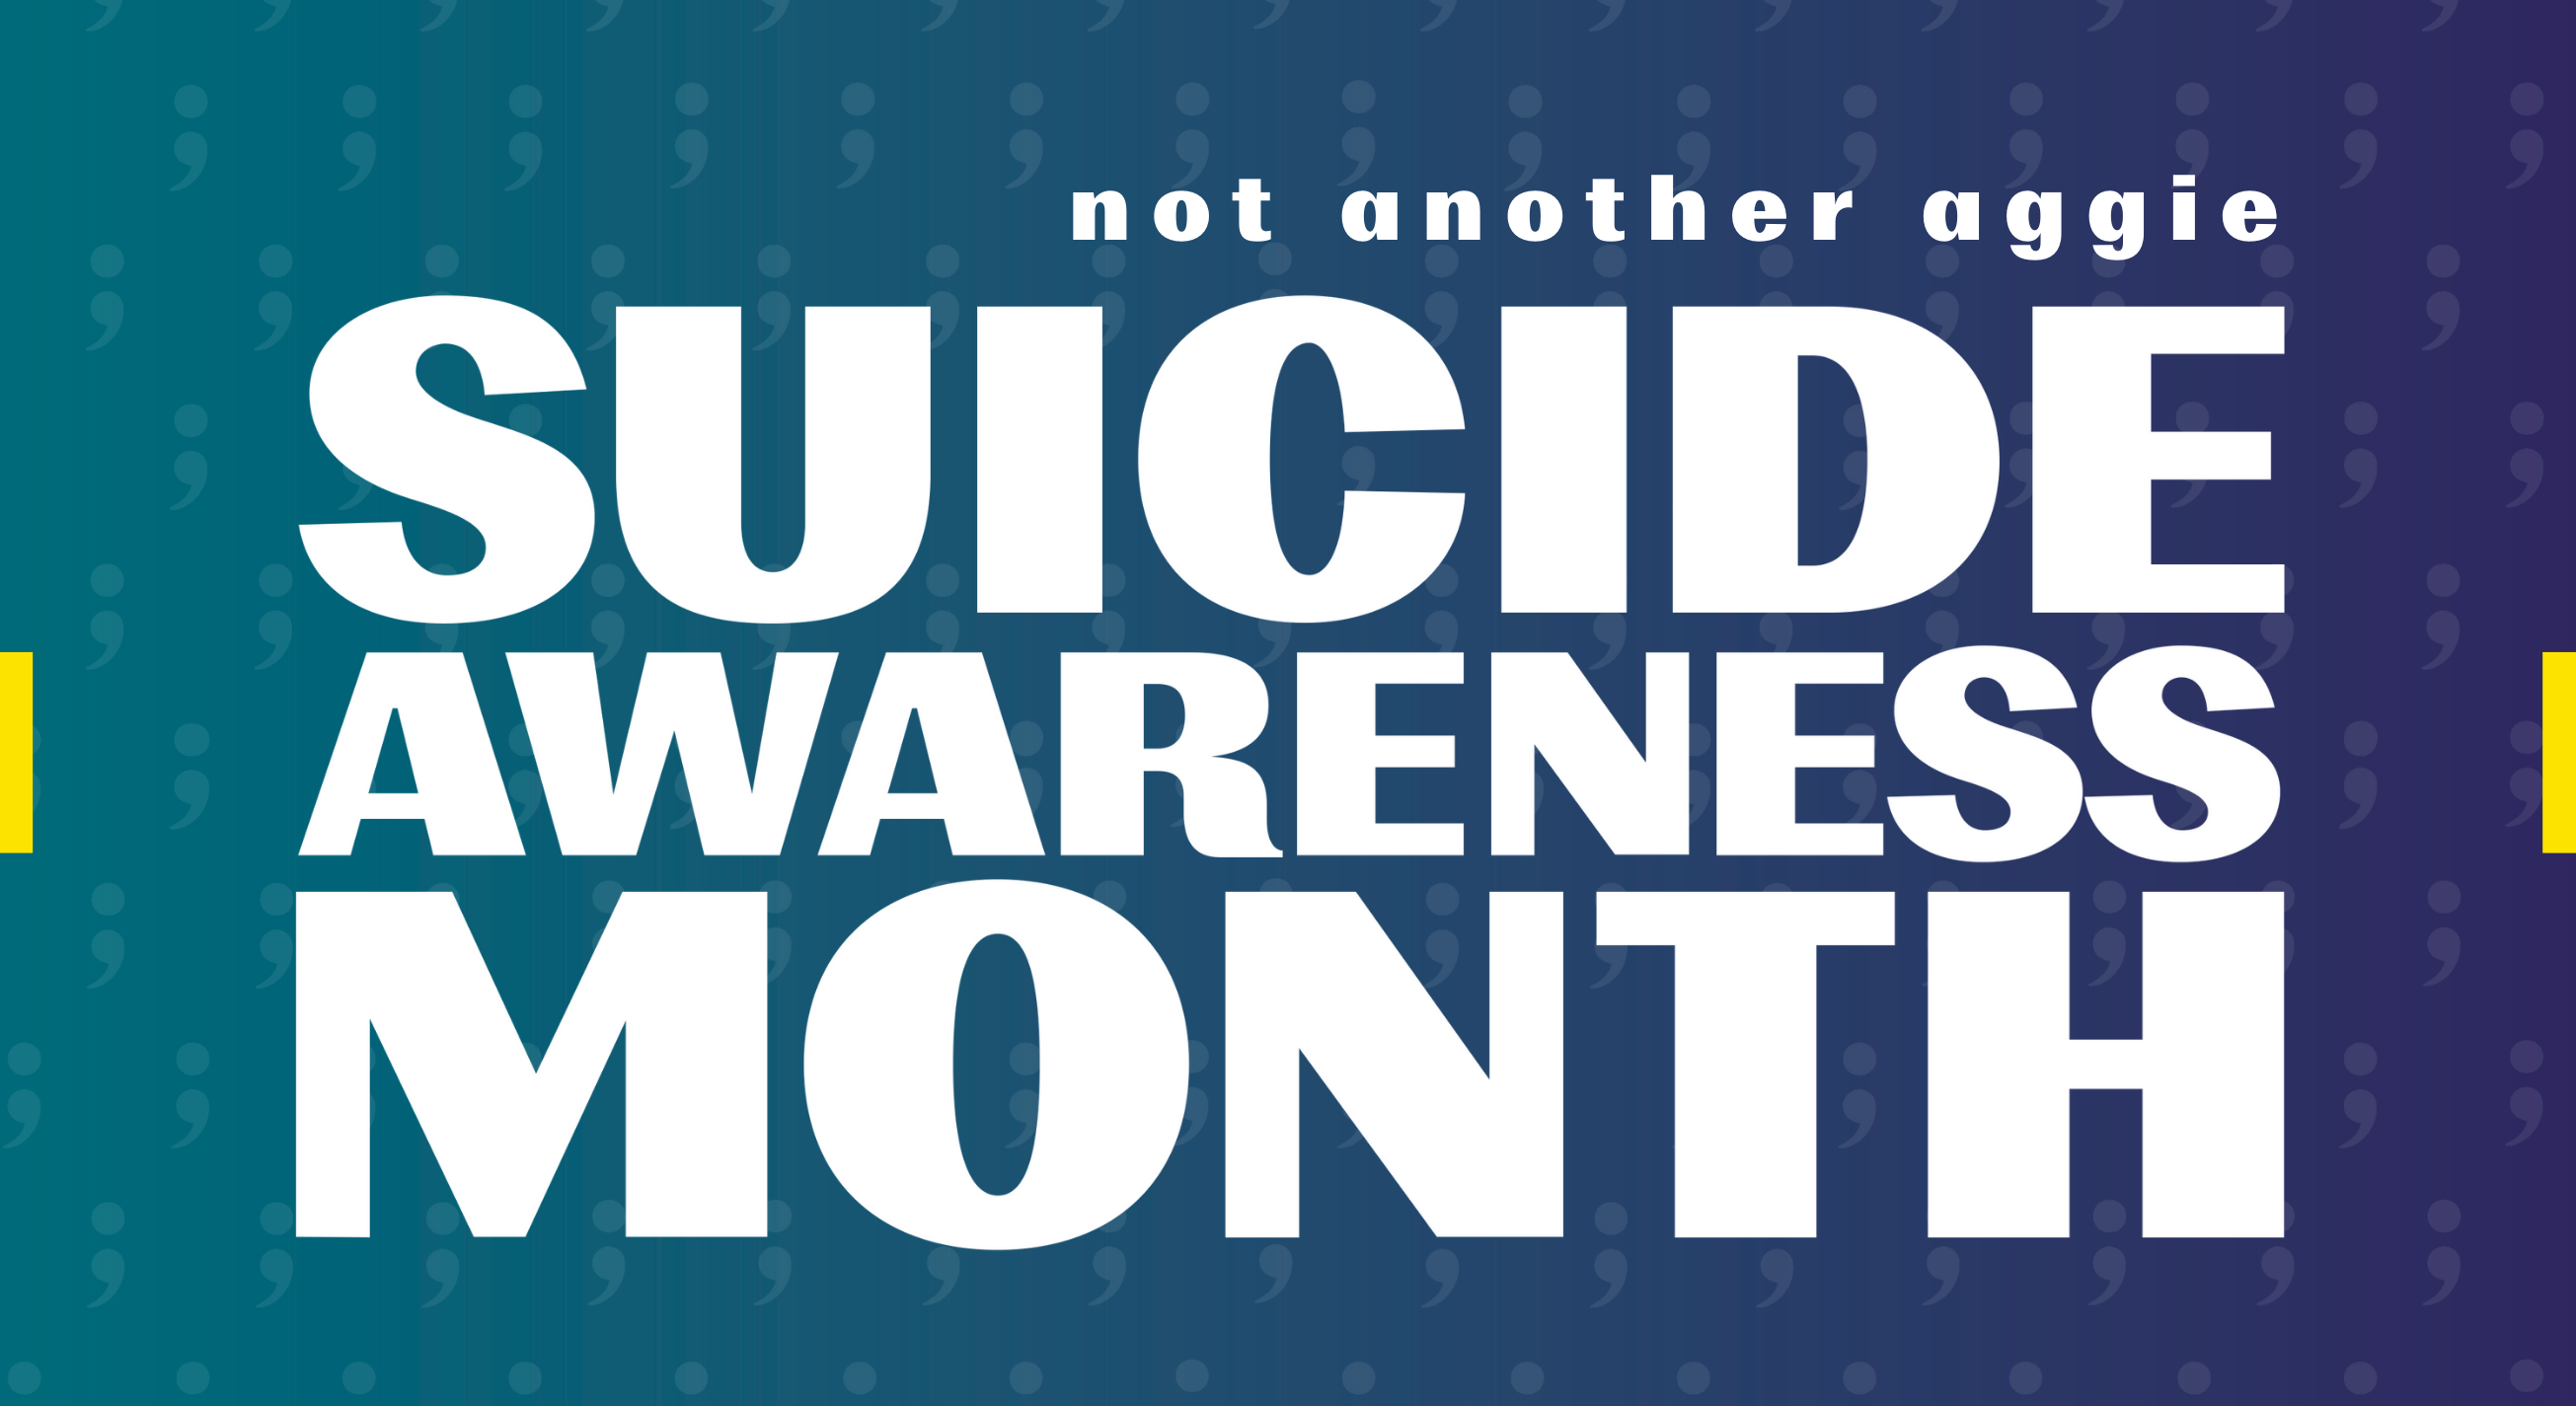 Suicide Awareness Month hero image